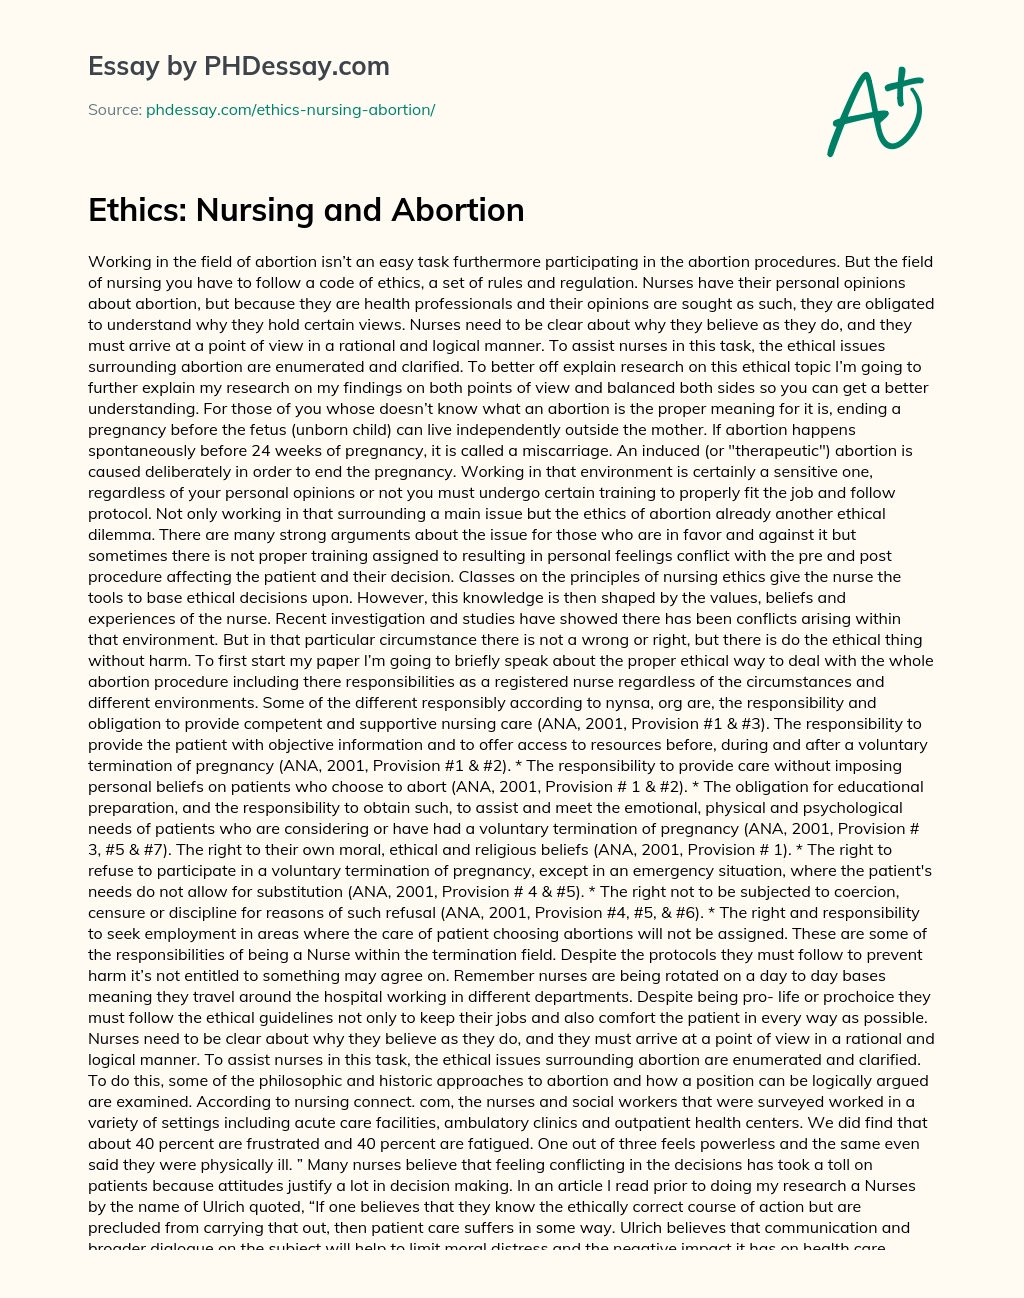 Ethics: Nursing and Abortion essay